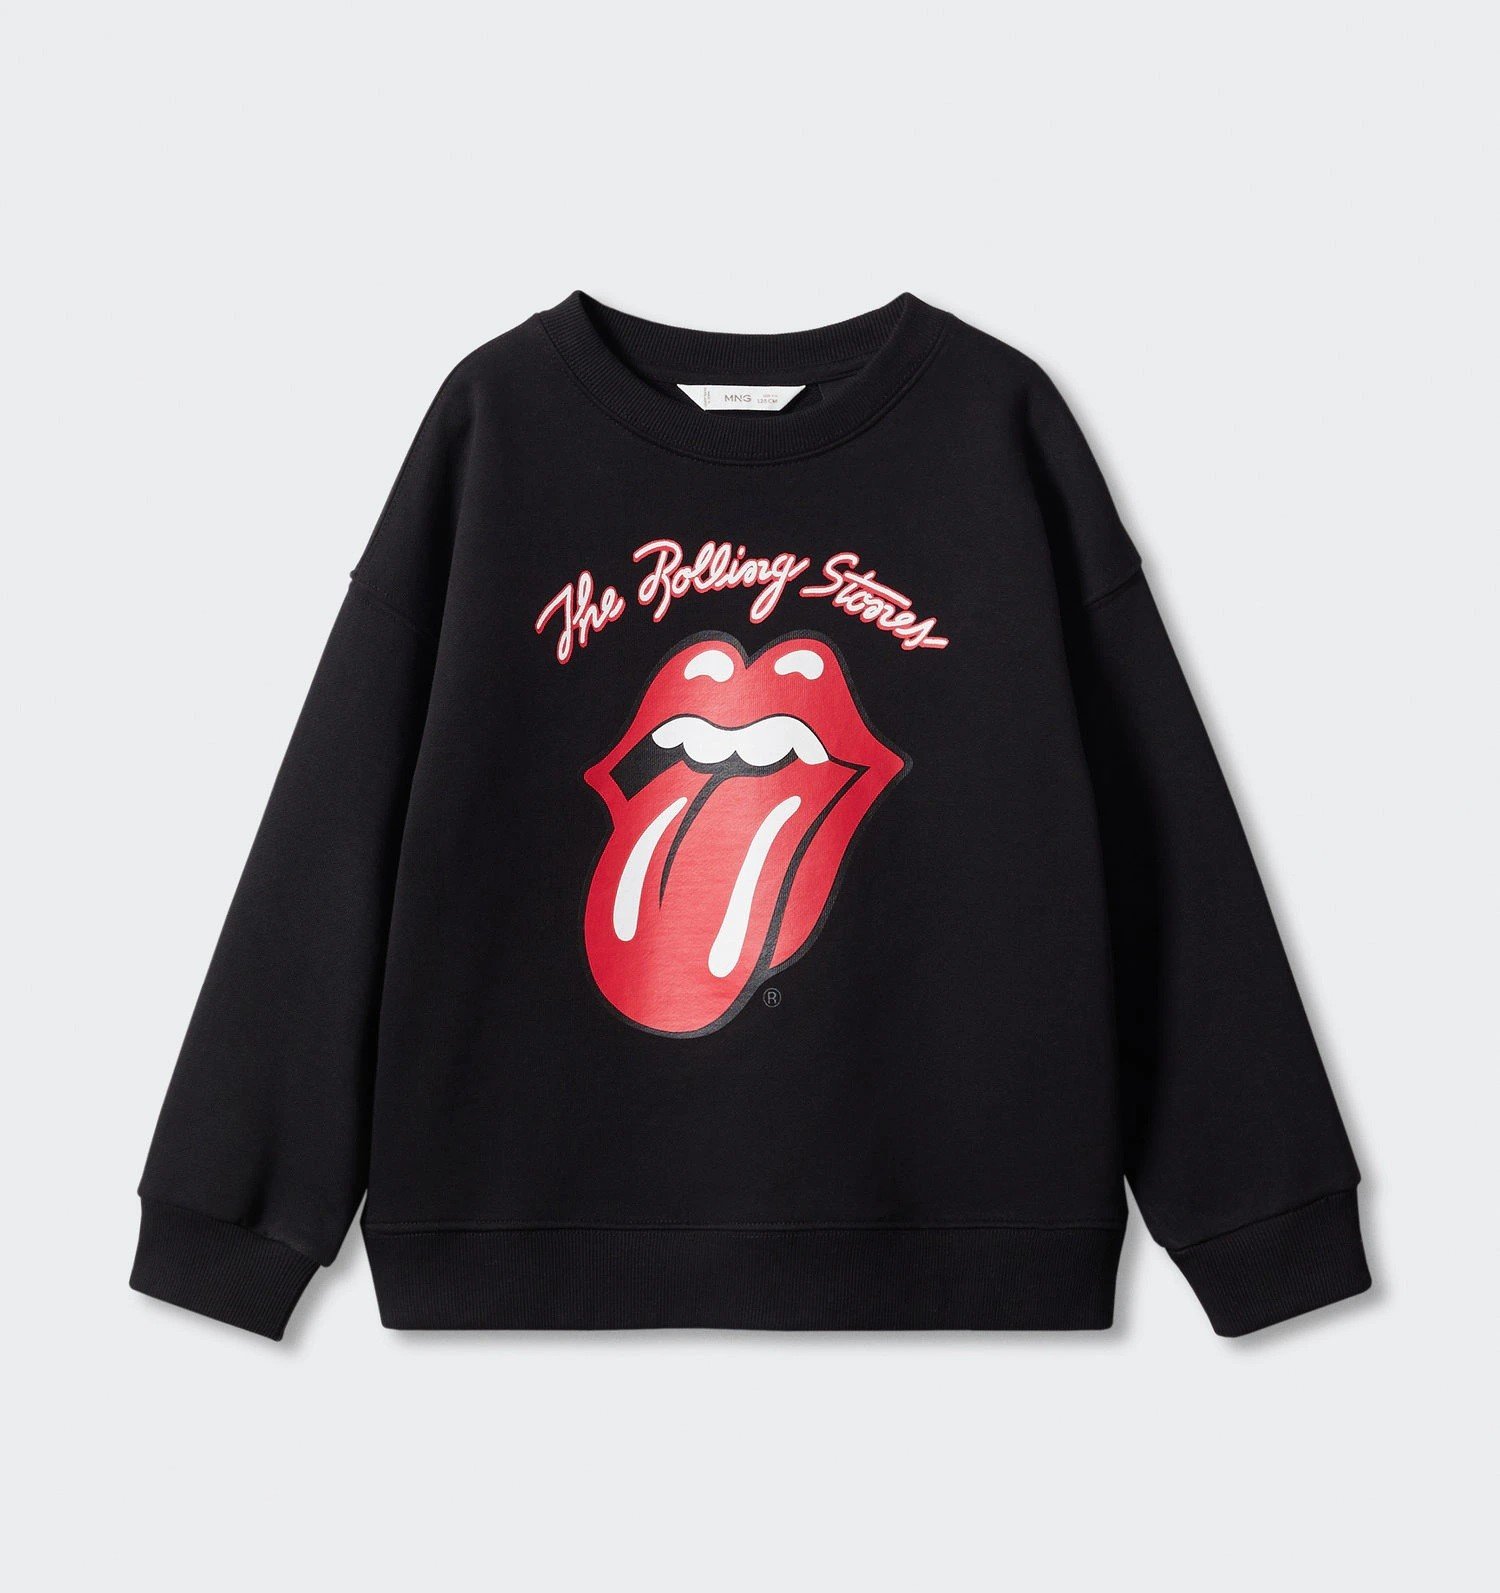 Mango Kids The Rolling Stones Sweatshirt.jpg